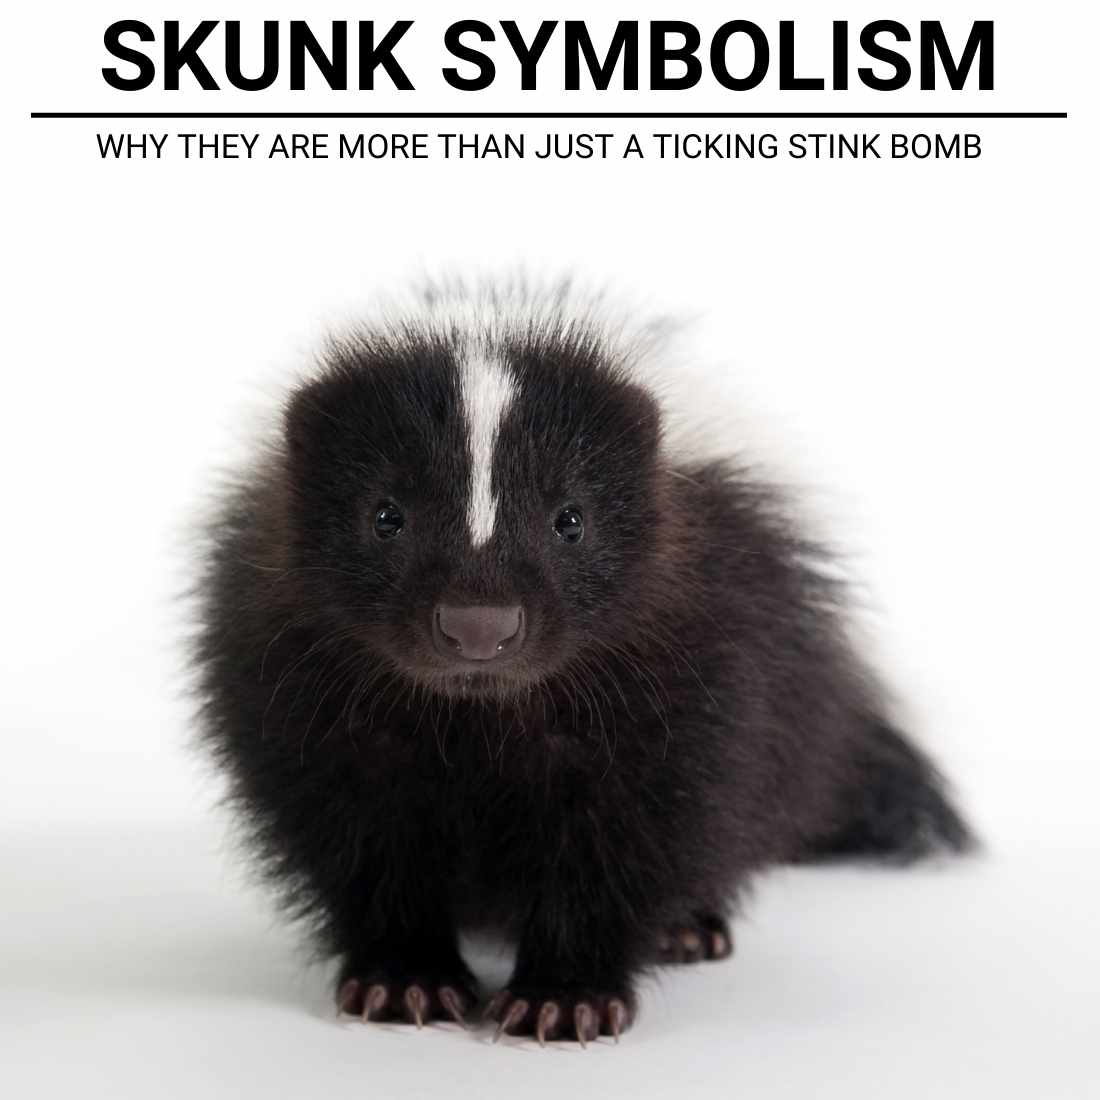 Skunk Symbolism